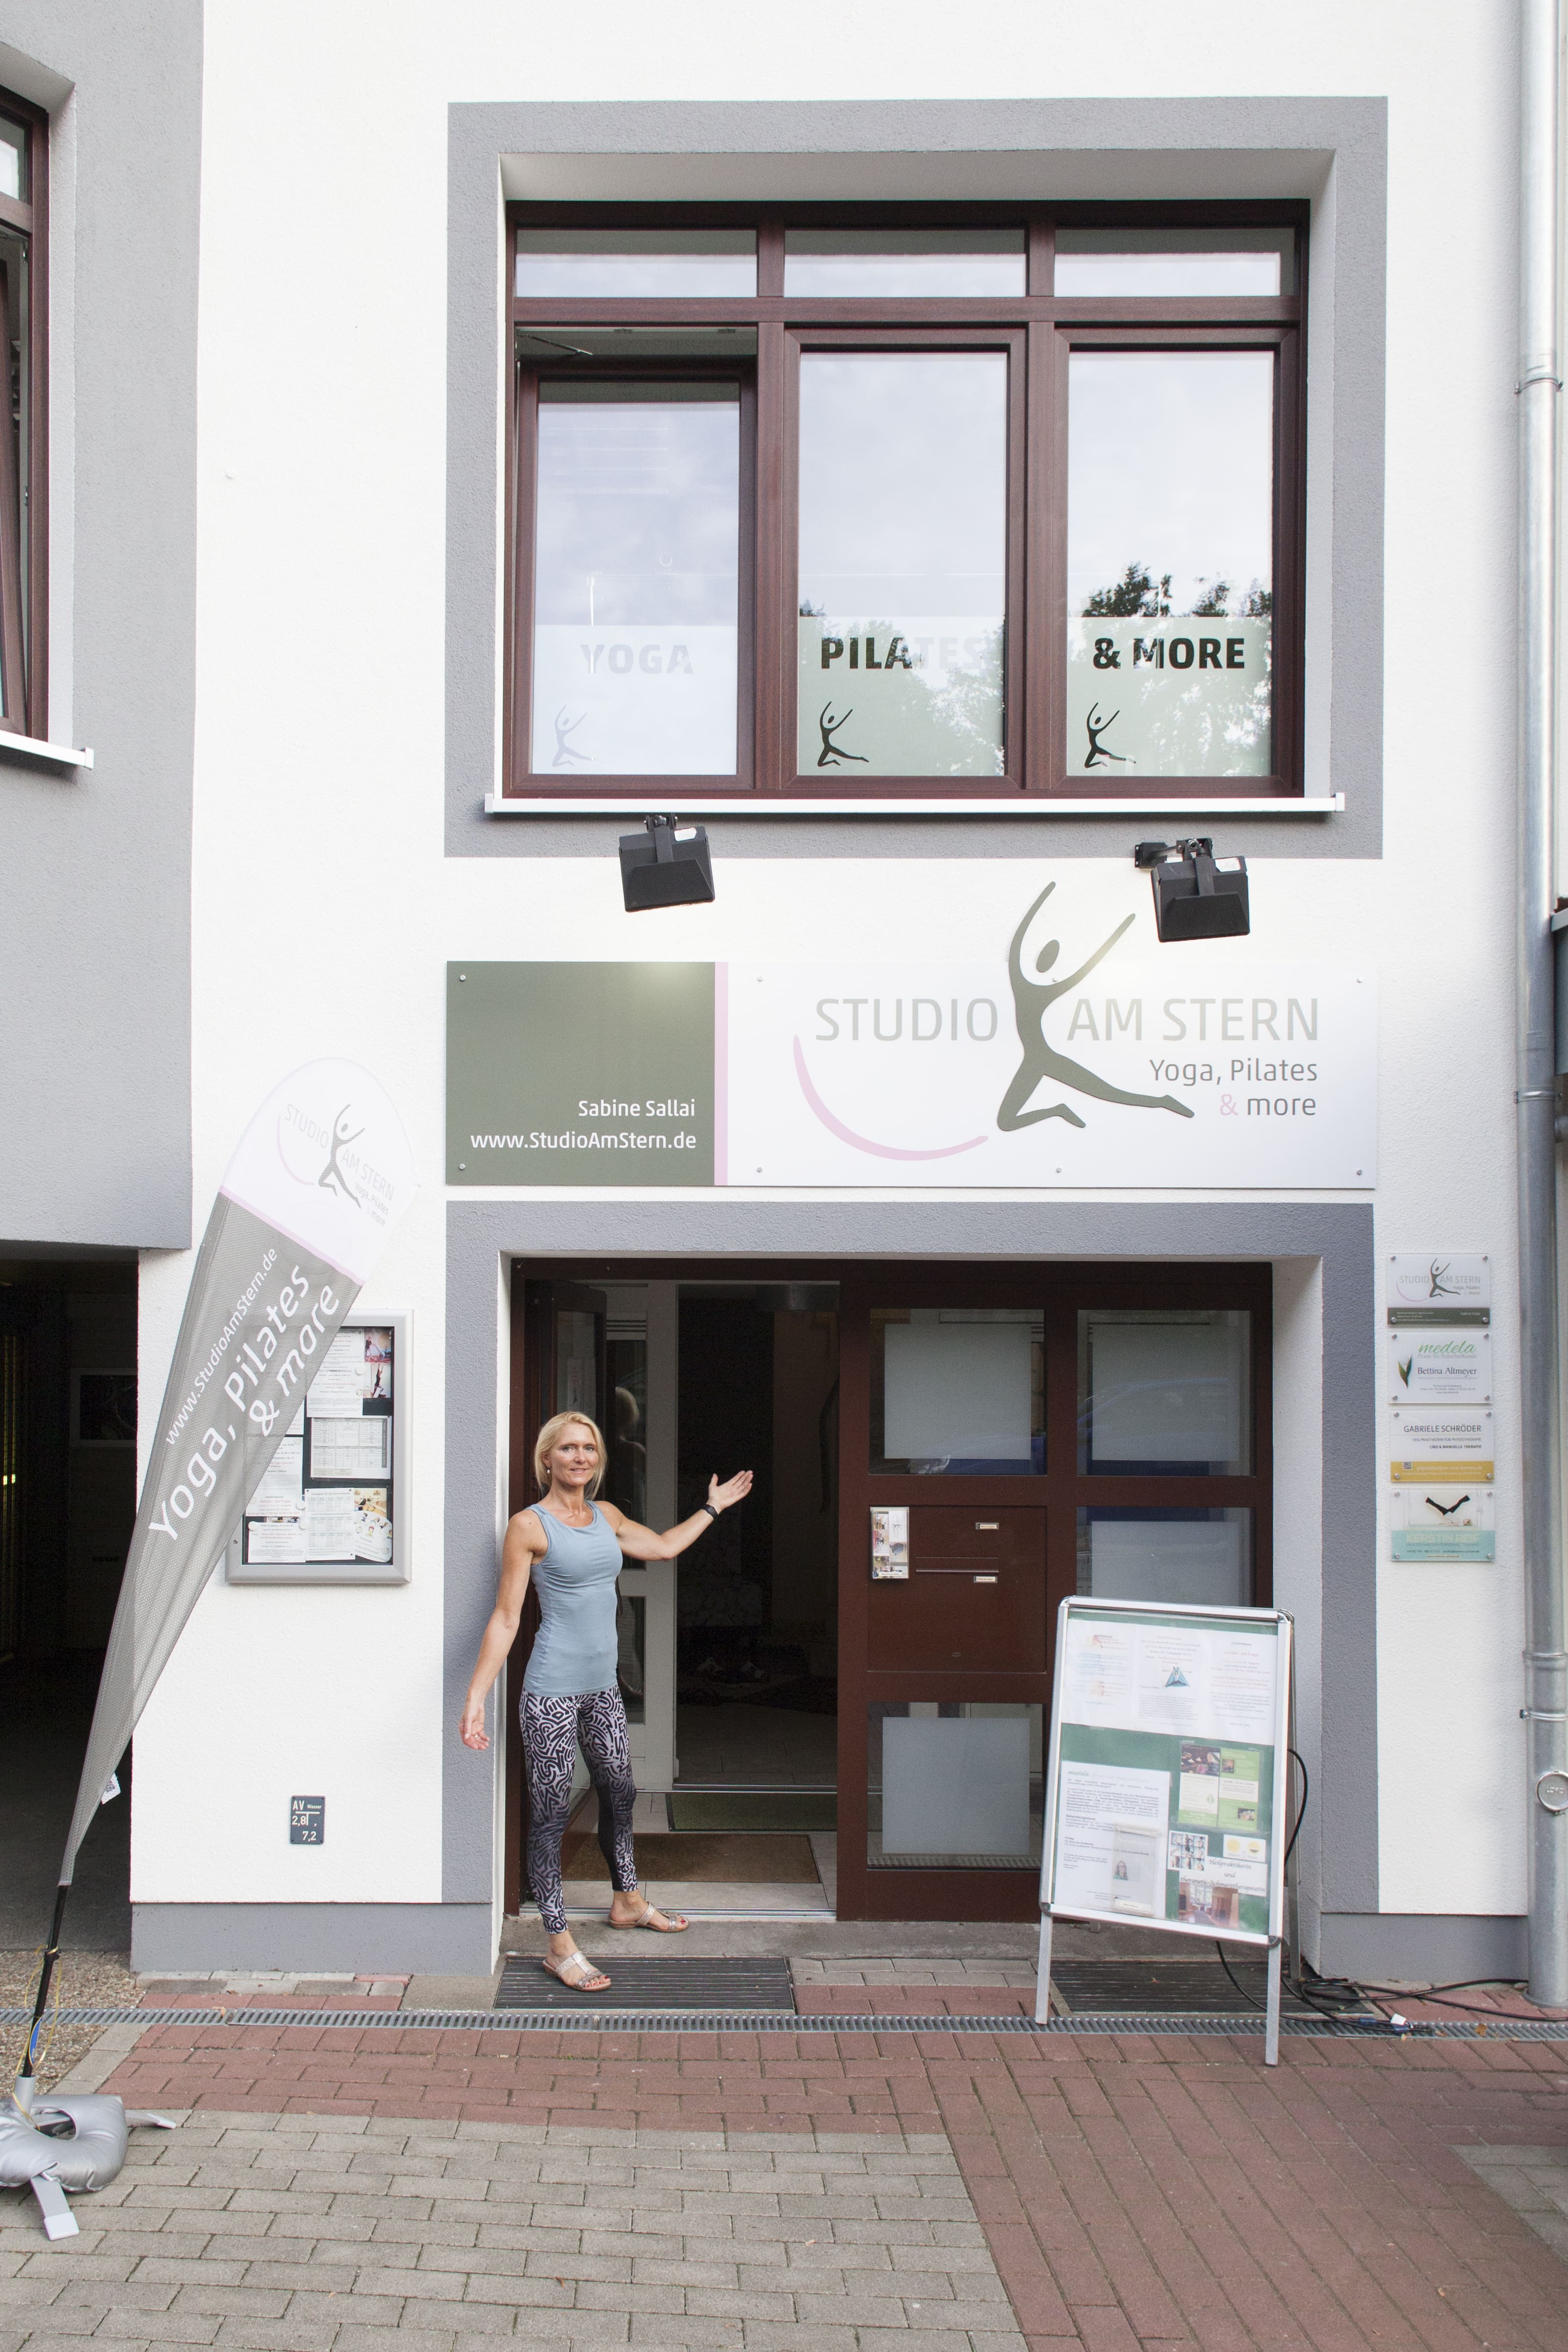 Studio am Stern; Yoga, Pilates and more, Wachmannstraße 5 in Bremen